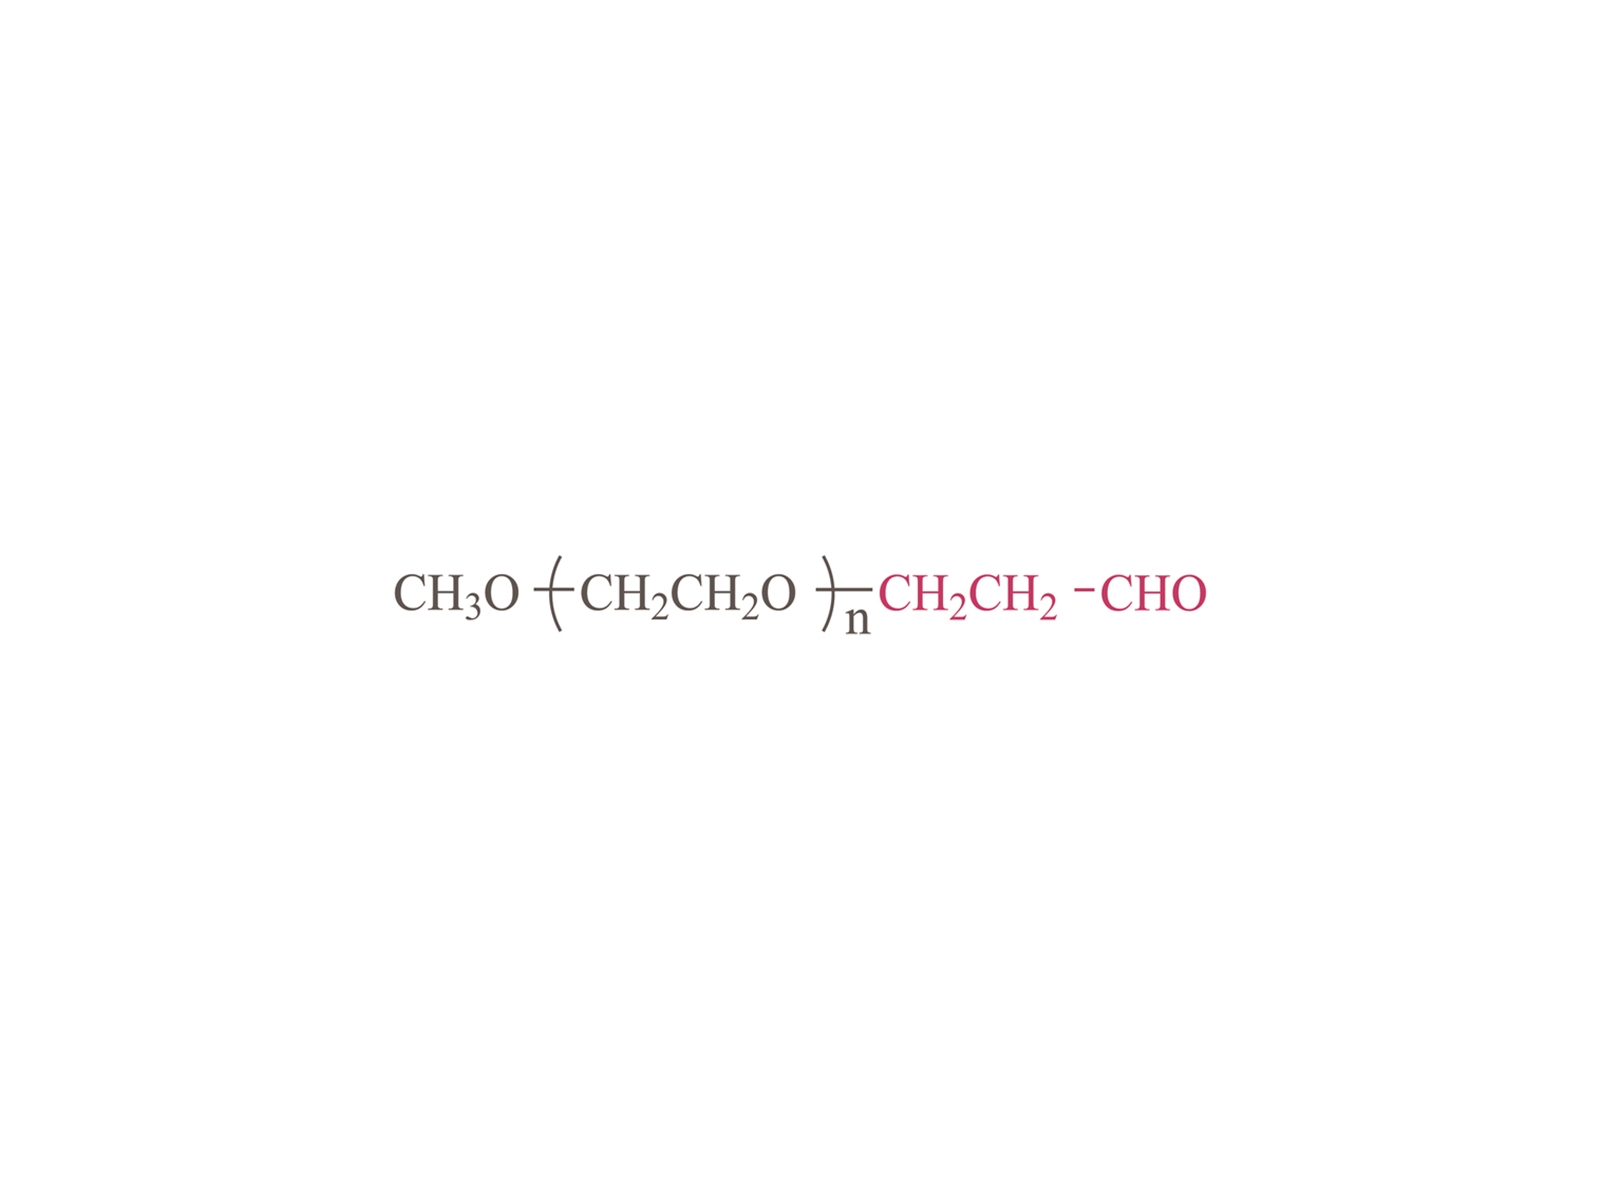 PROPIONALDÉHYDE DE METHOXYPOLY (Ethylene GLYCOL) [MPEG-PALD] CAS: 125061-88-3